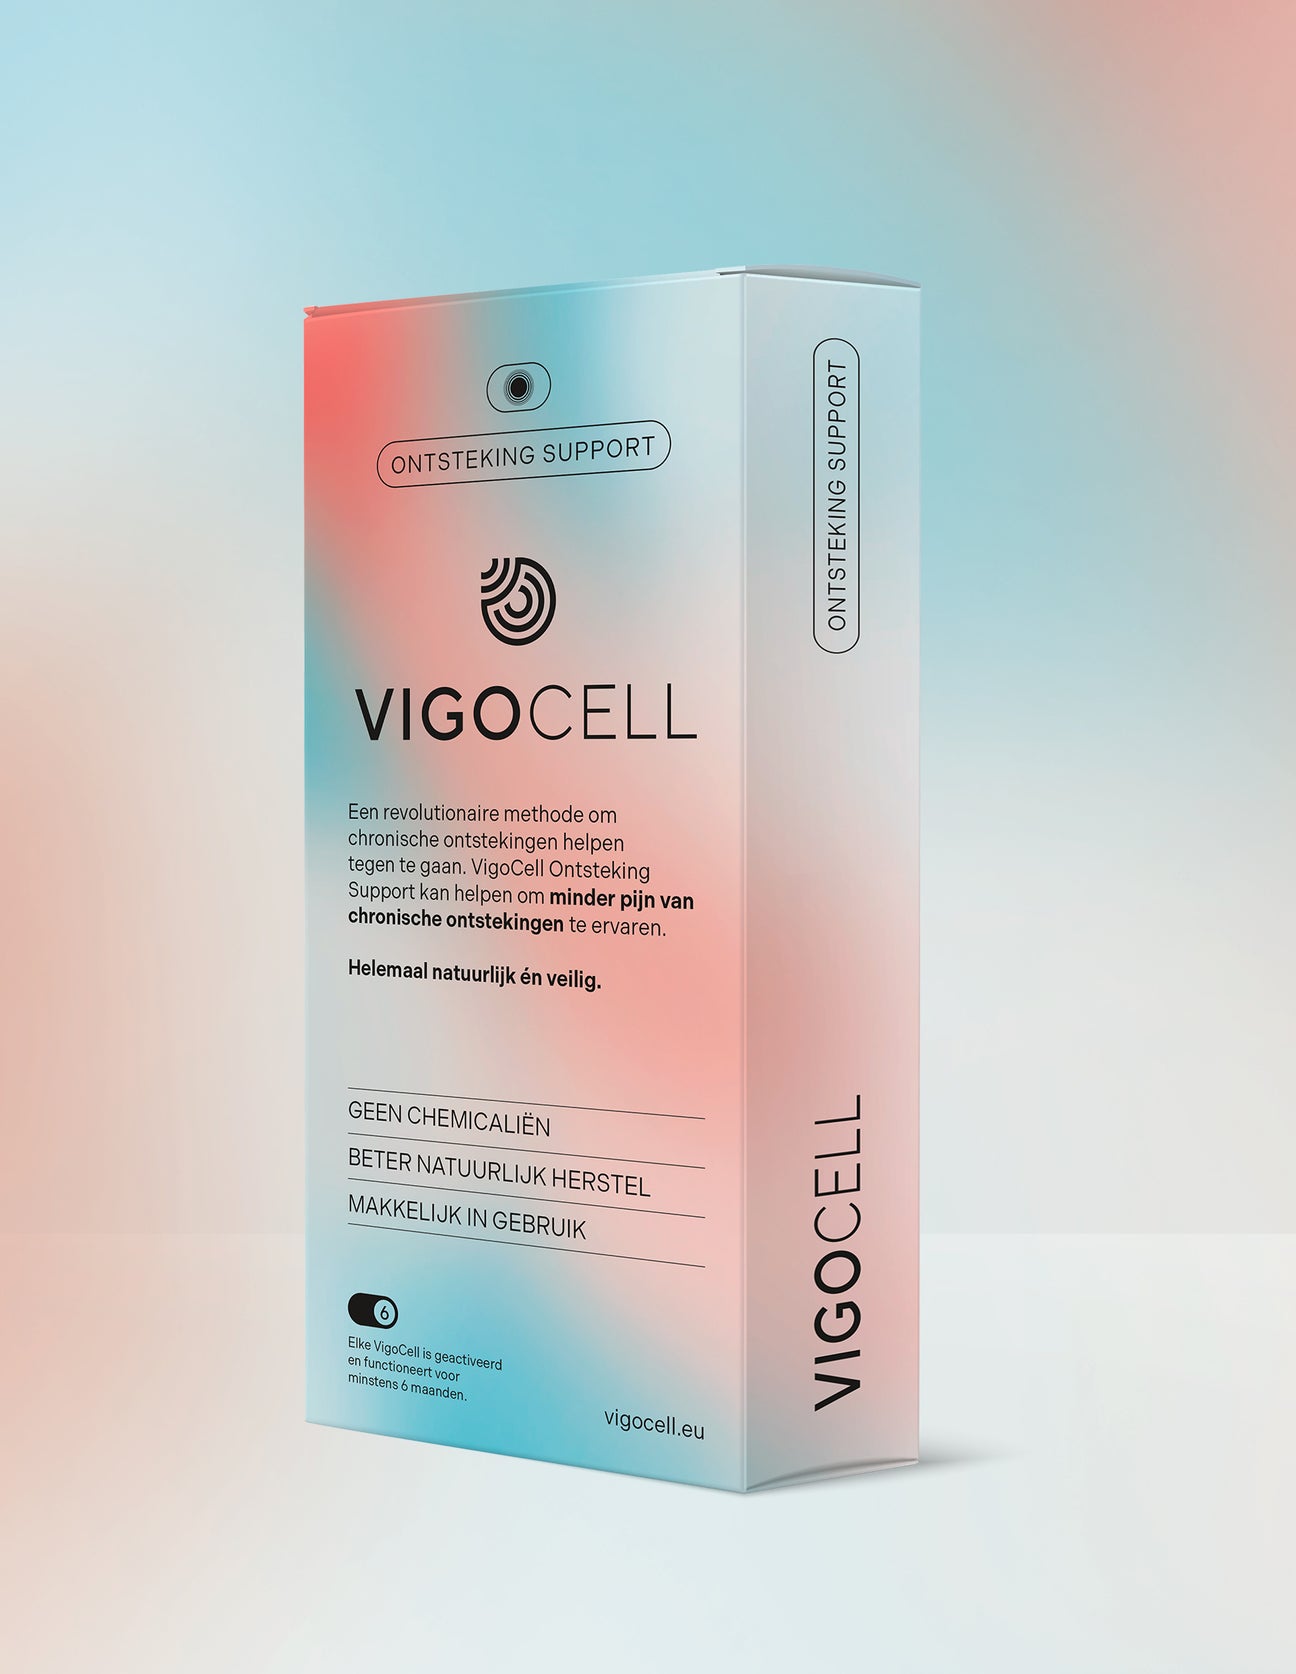 VigoCell Ontsteking Support verpakking